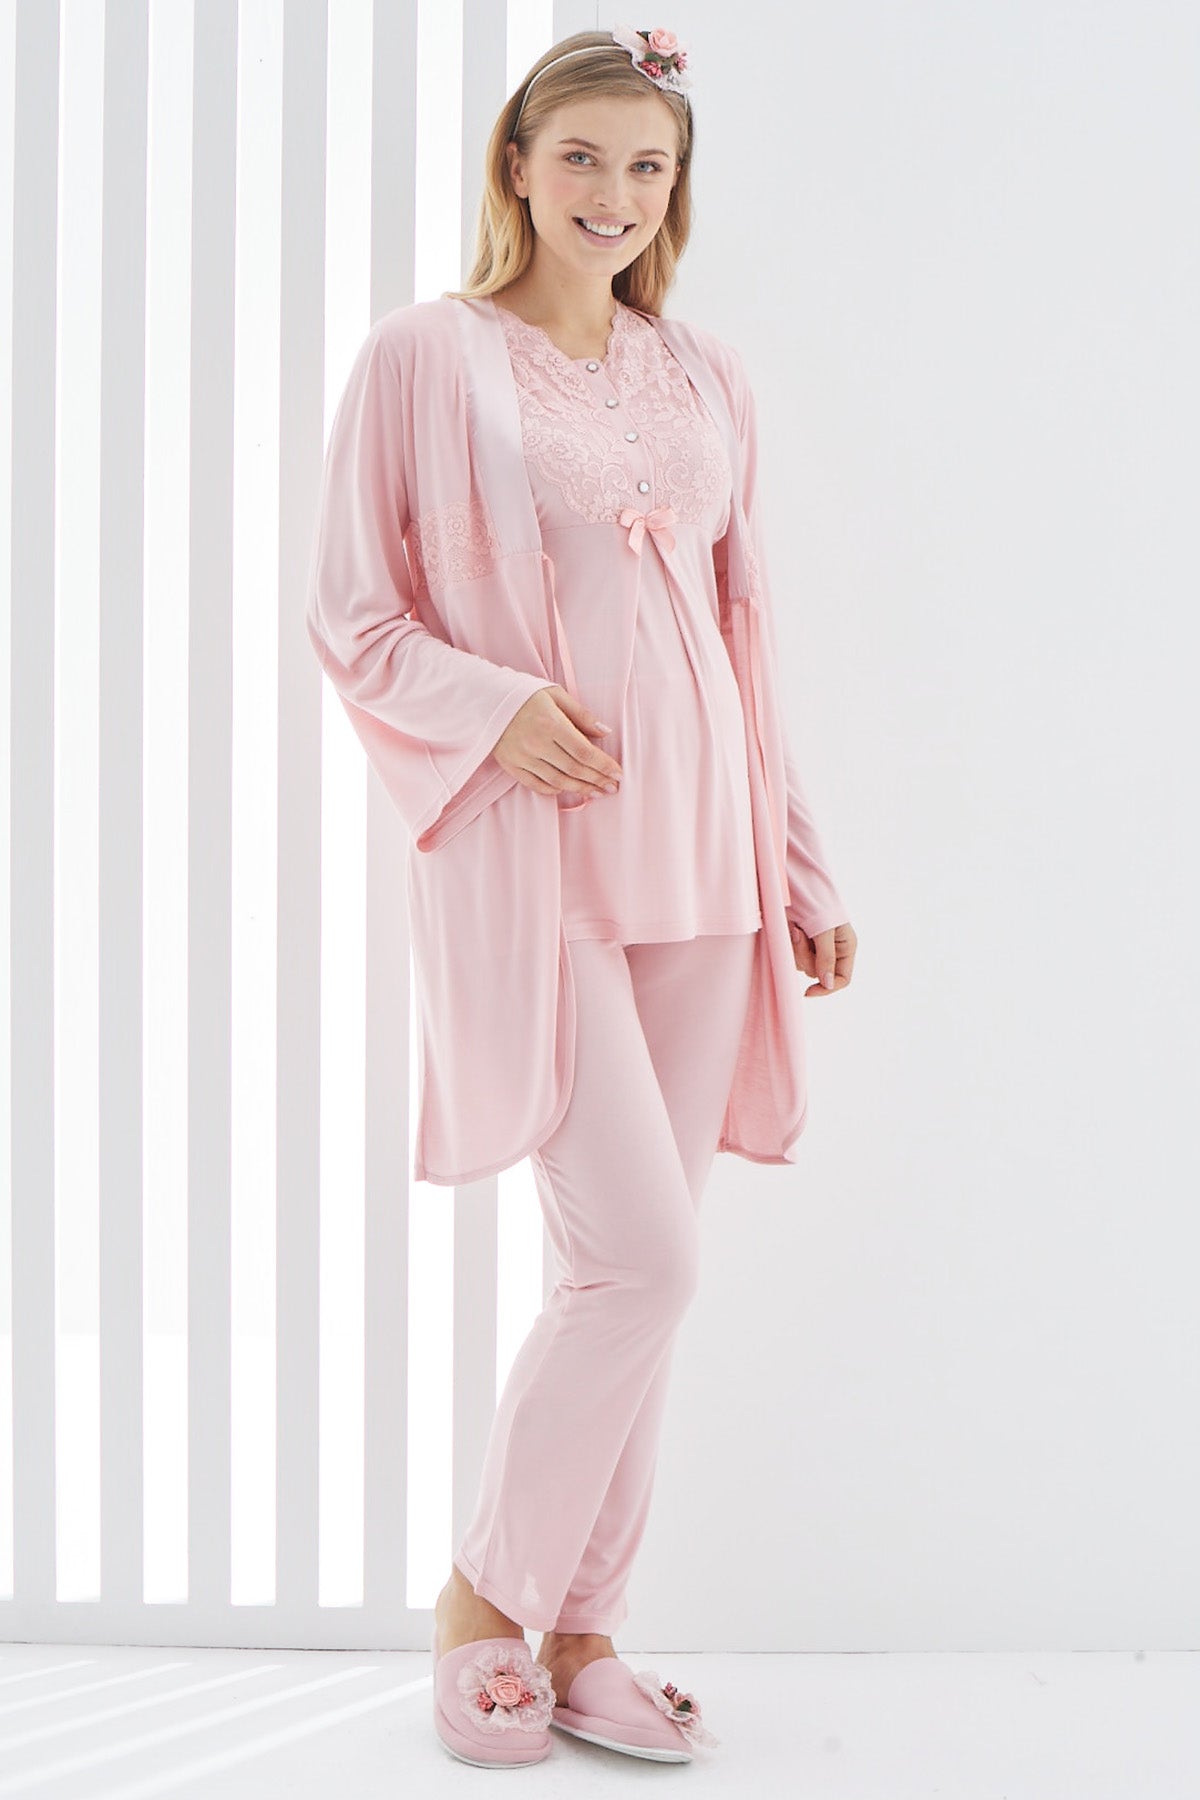 Shopymommy 3410 Lace Collar 3-Pieces Maternity & Nursing Pajamas With Robe Powder